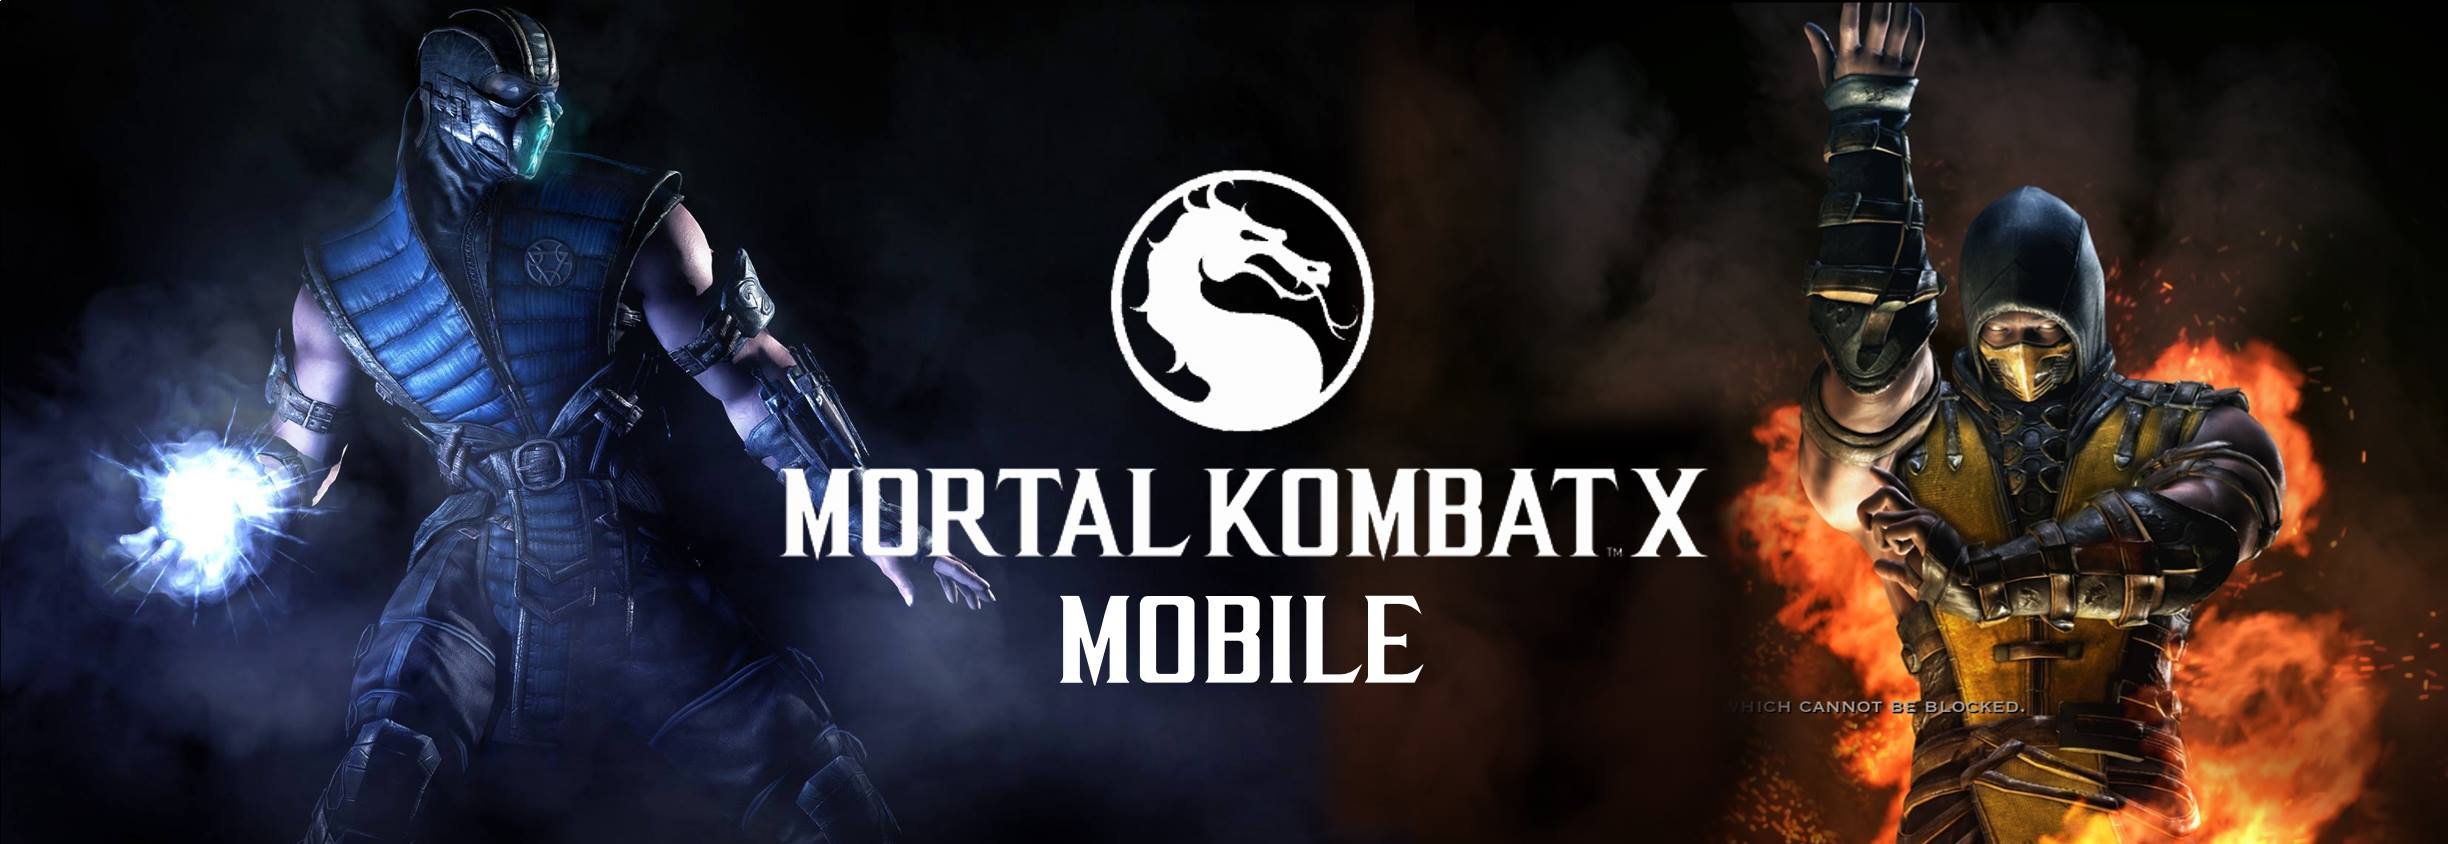 Mkx mobile вк. Mortal Kombat mobile MK 11. Шапка мортал комбат мобайл. Шапка МК 11 саб Зиро. Скорпион Mortal Kombat mobile.